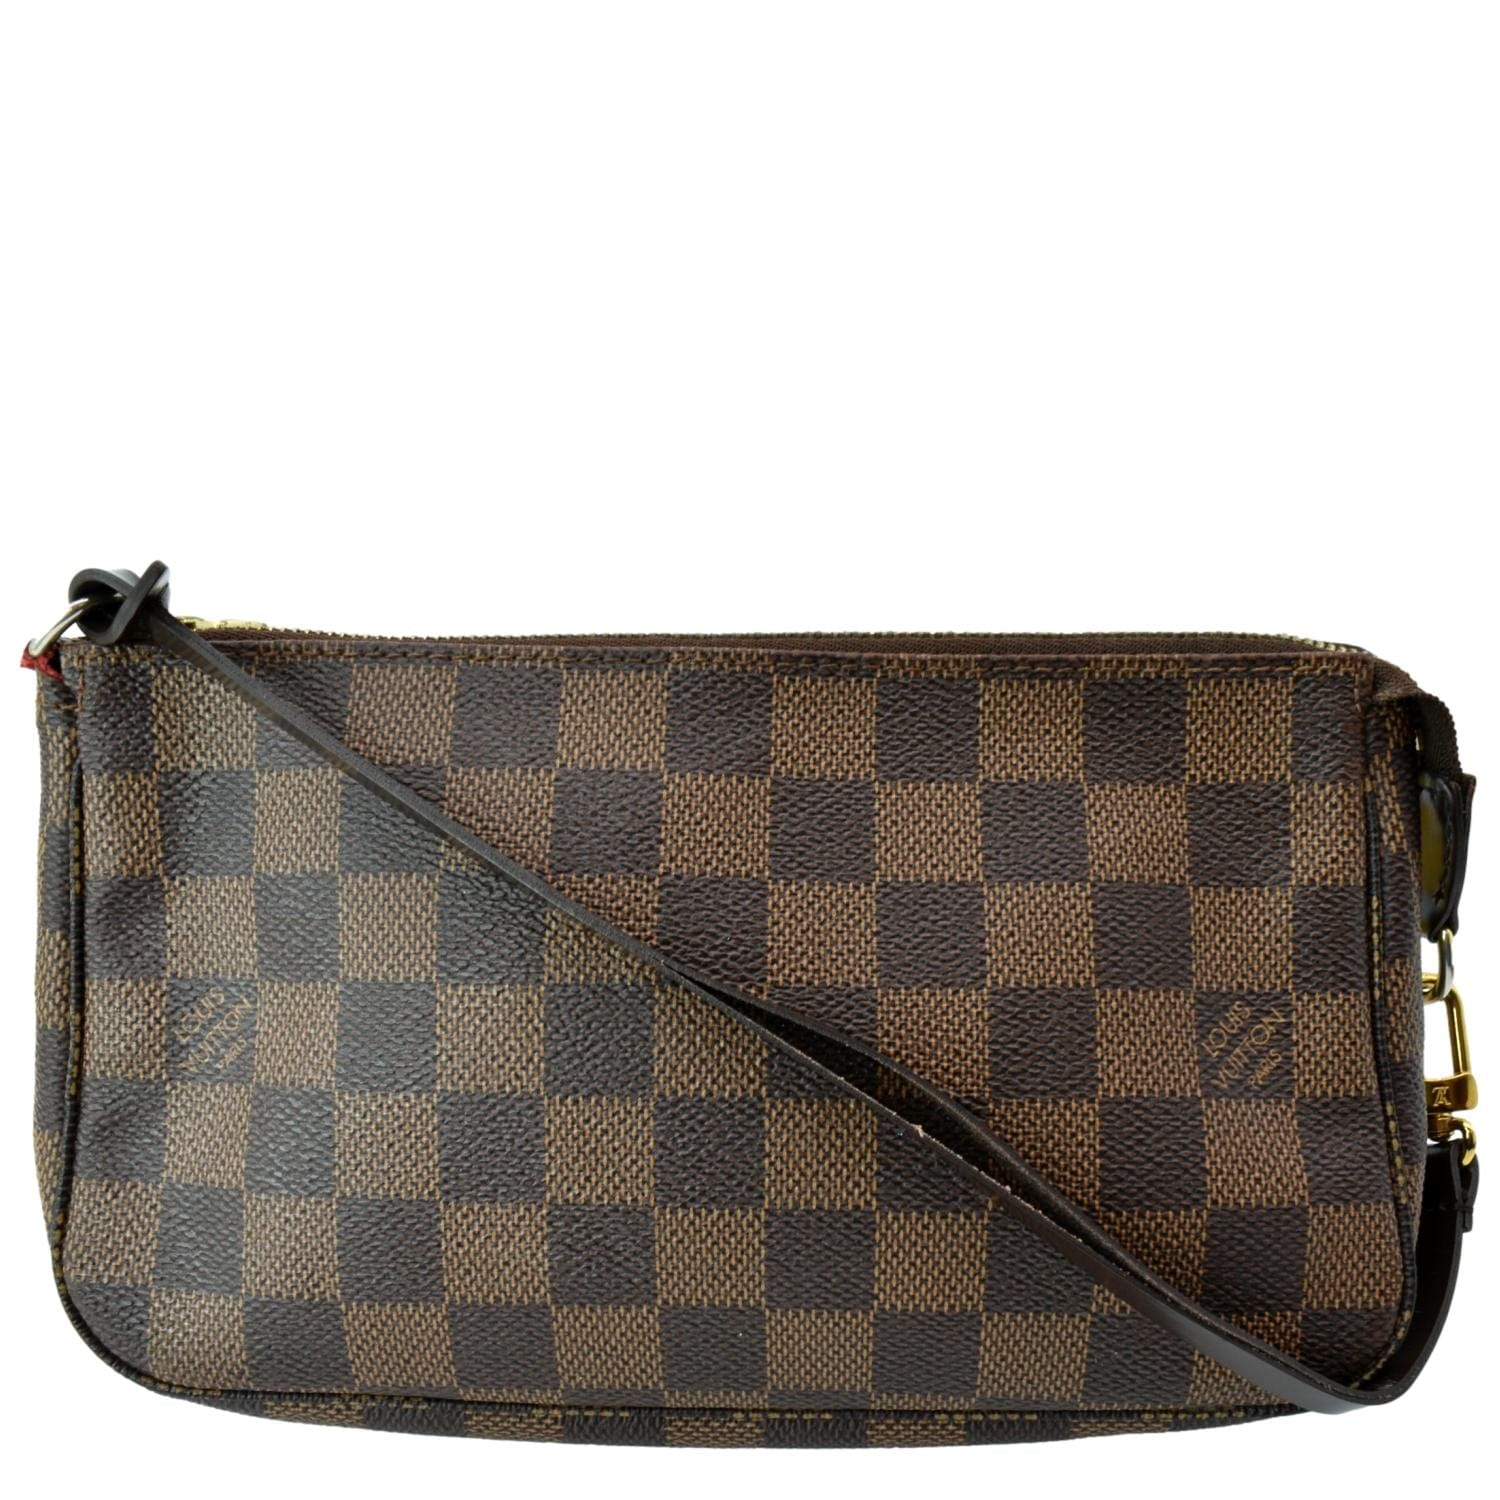 🥰 LV Pochette Cite : r/handbags